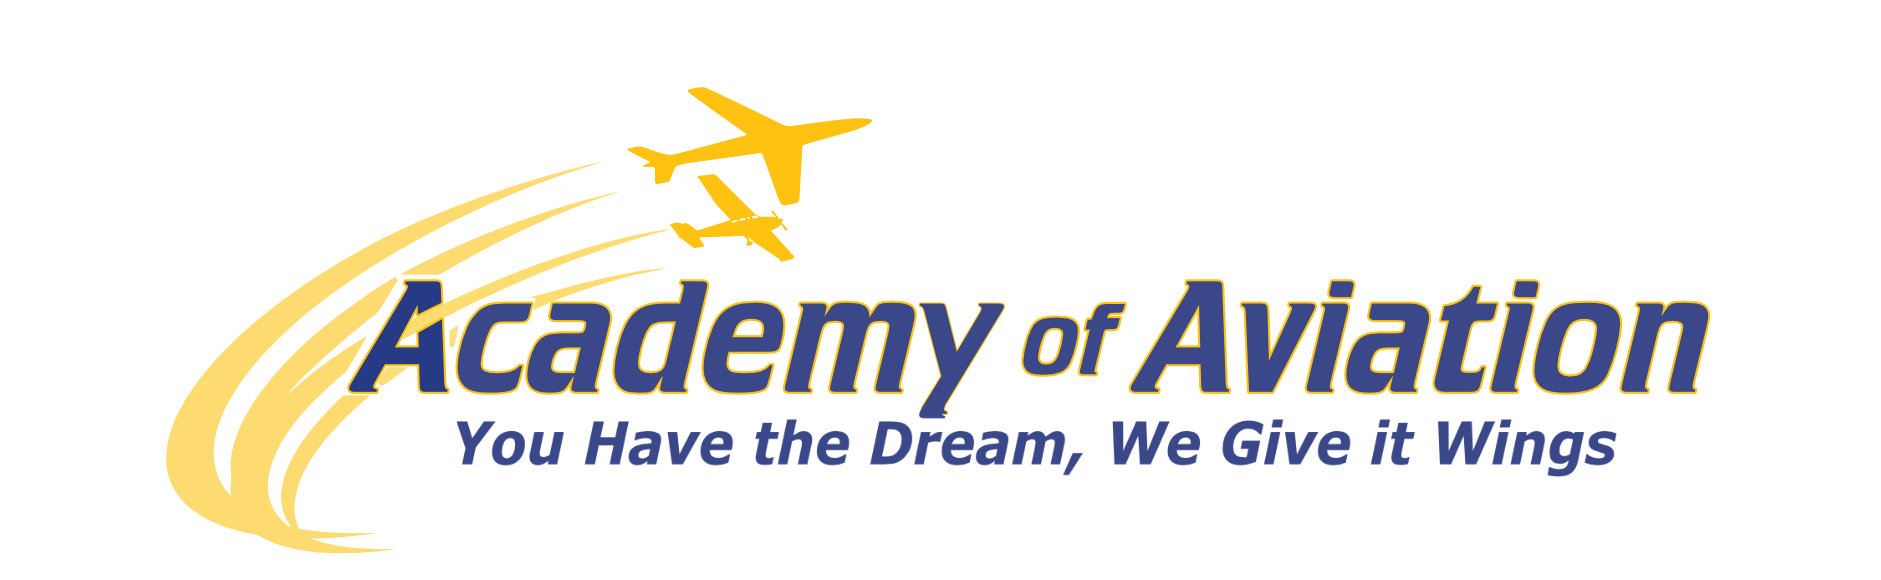 Academy of Aviation Blog